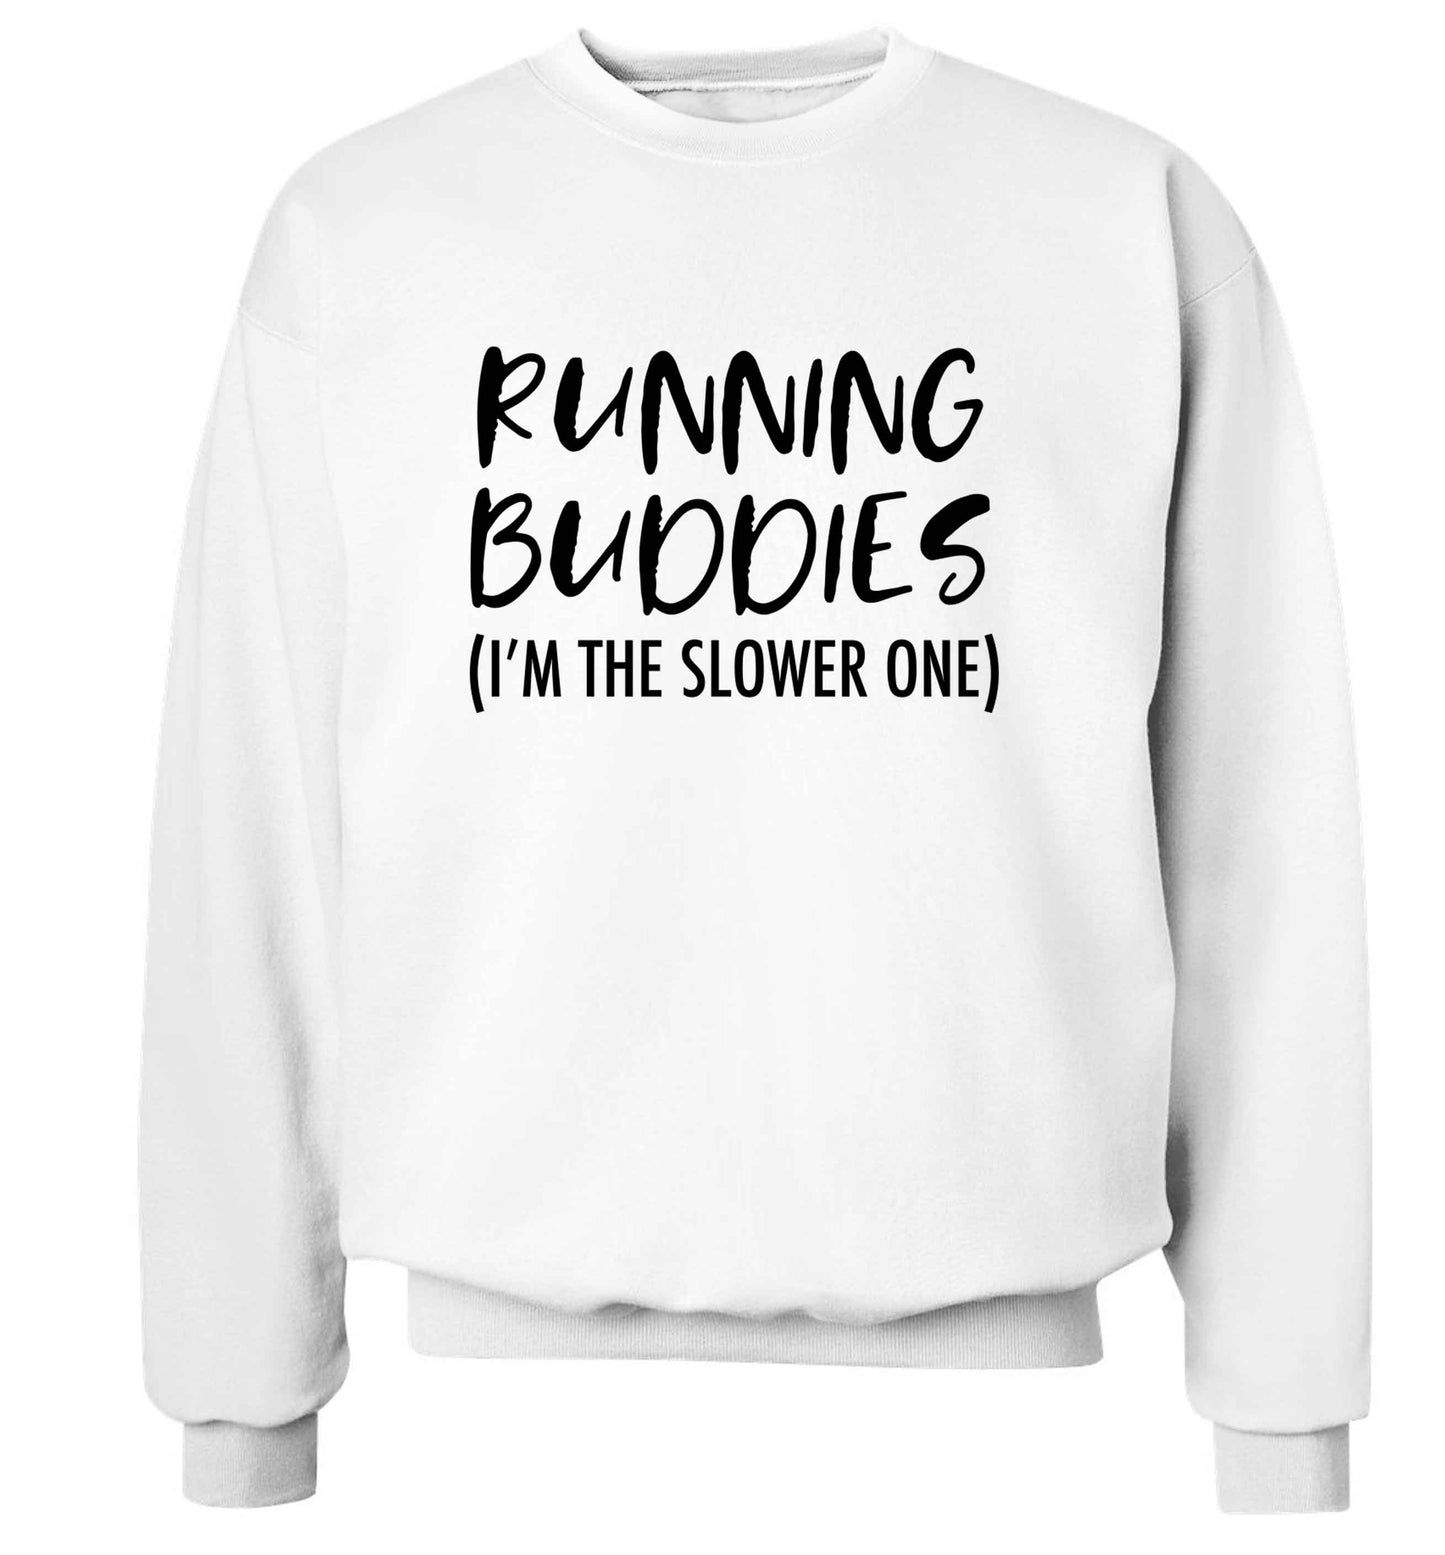 Running buddies (I'm the slower one) adult's unisex white sweater 2XL